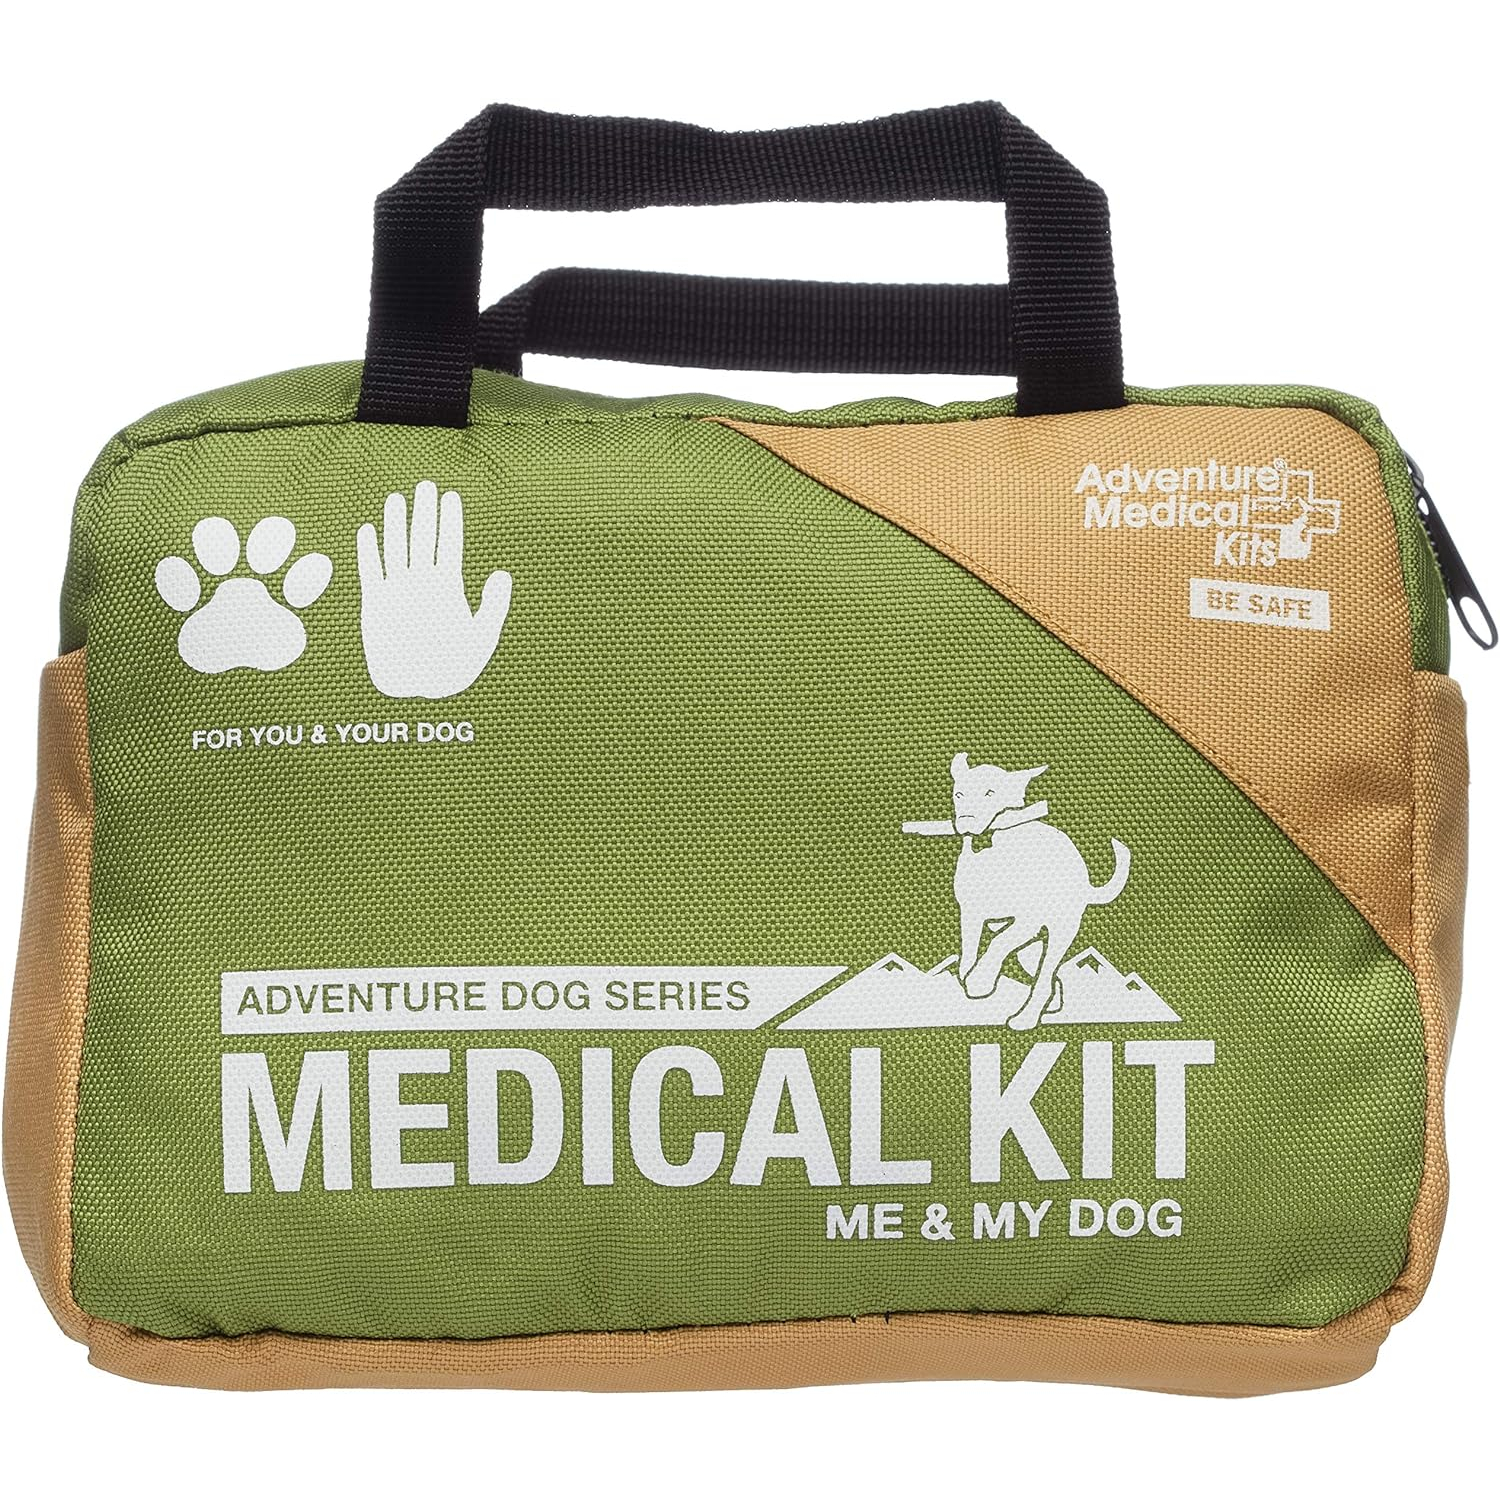 Adventure Medical Kit Dog Series Me & My Dog First Aid Kit